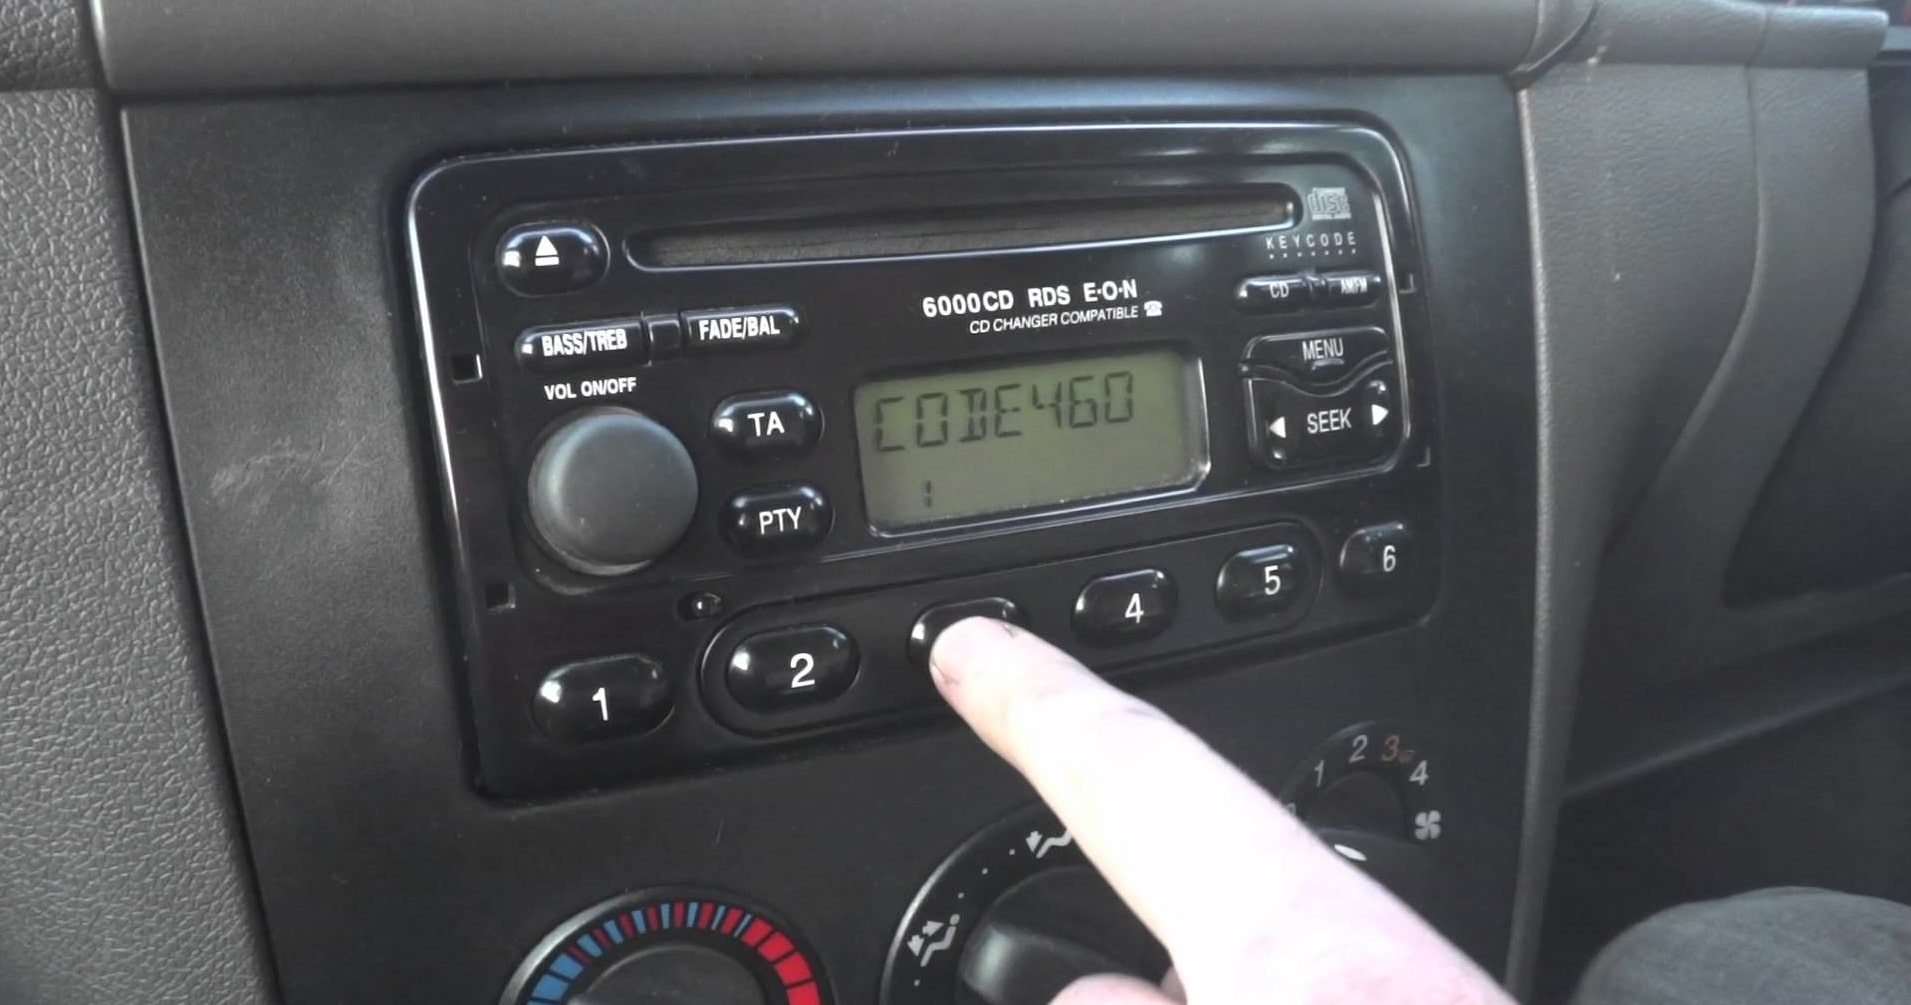 Enter Ford Radio Code